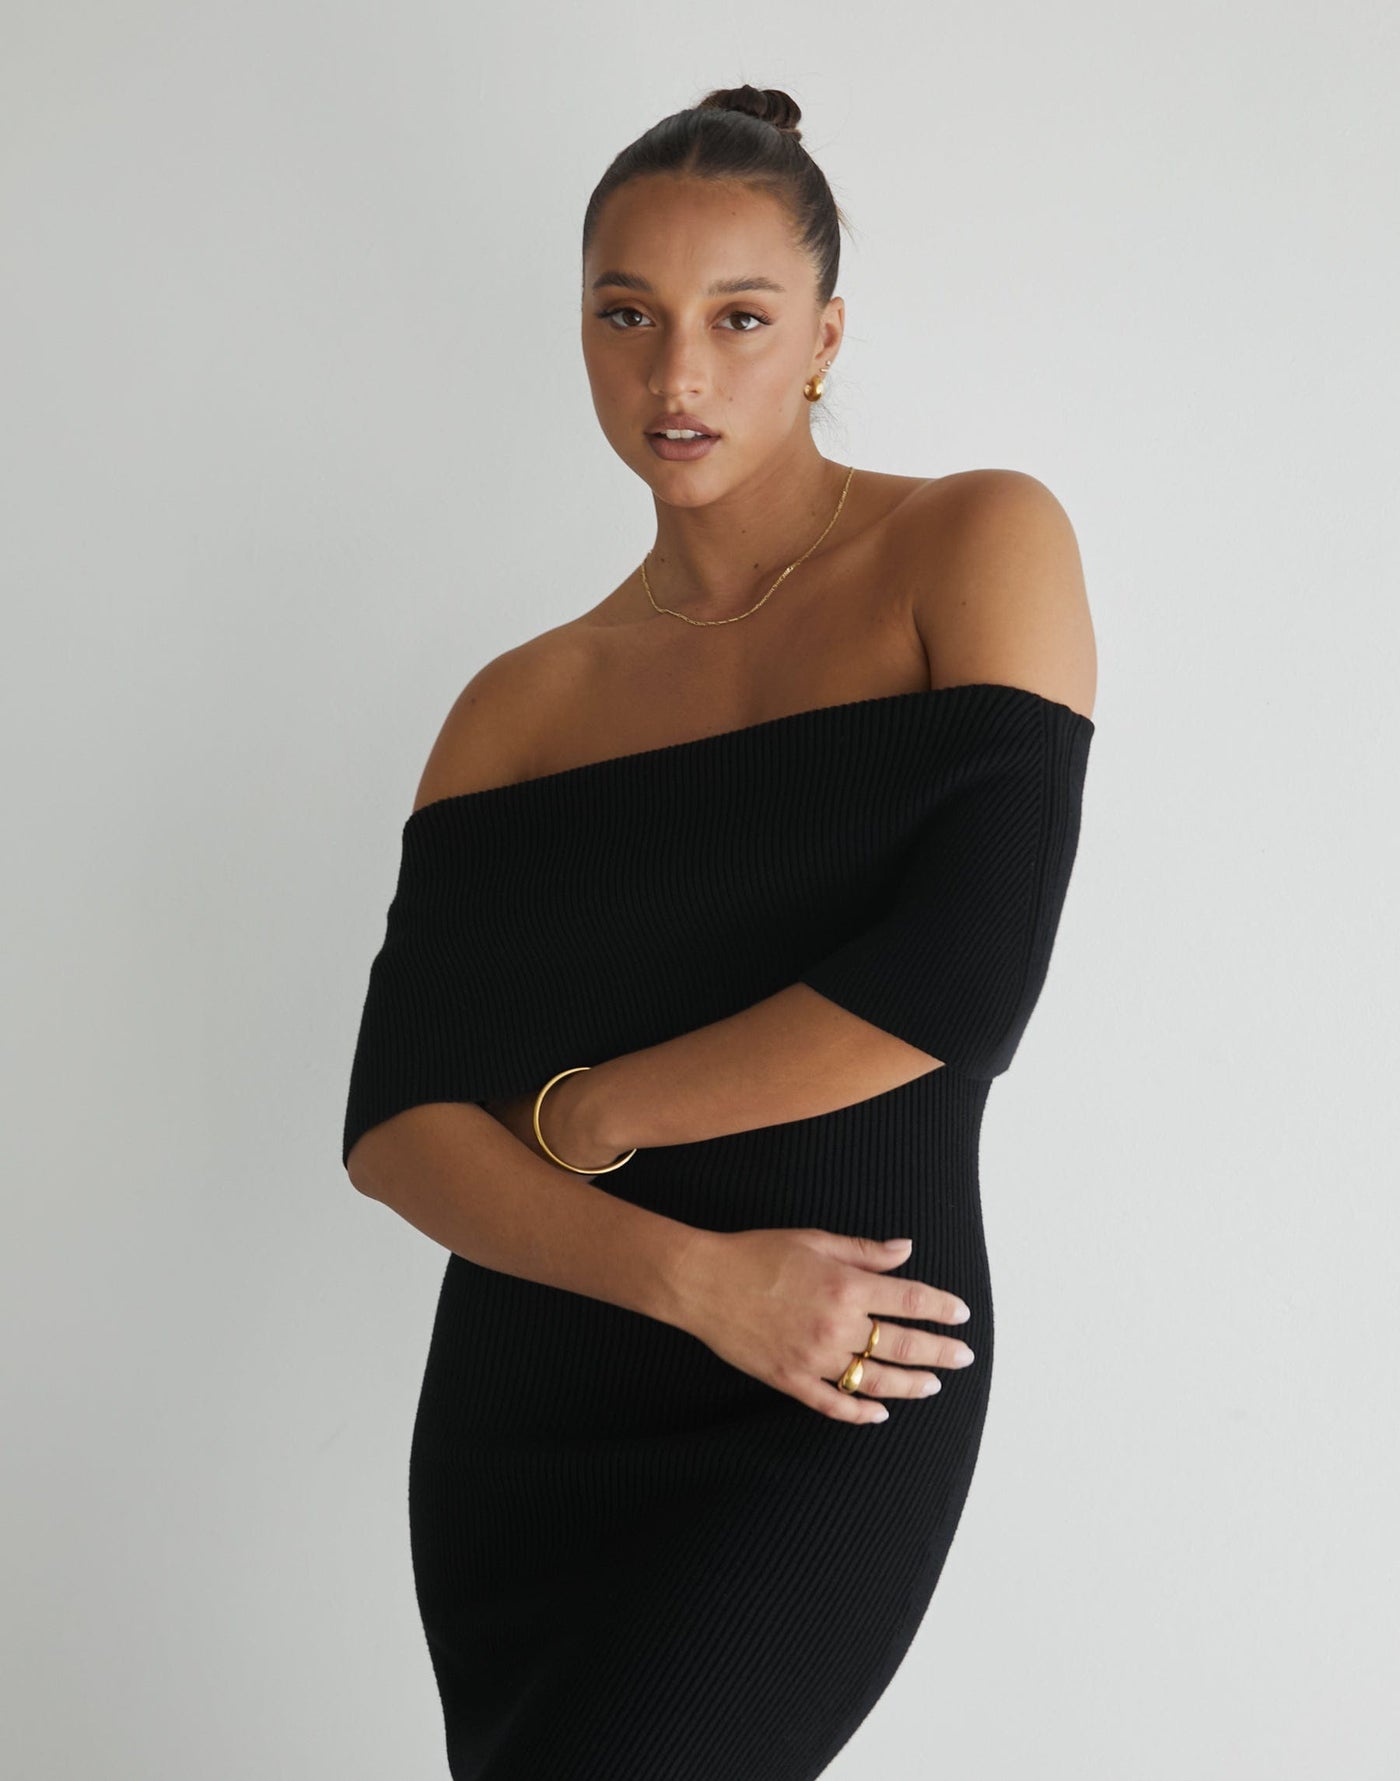 Ambiguity Maxi Dress (Black) - Black Knit Off The Shoulder Maxi Dress - Women's Dress - Charcoal Clothing